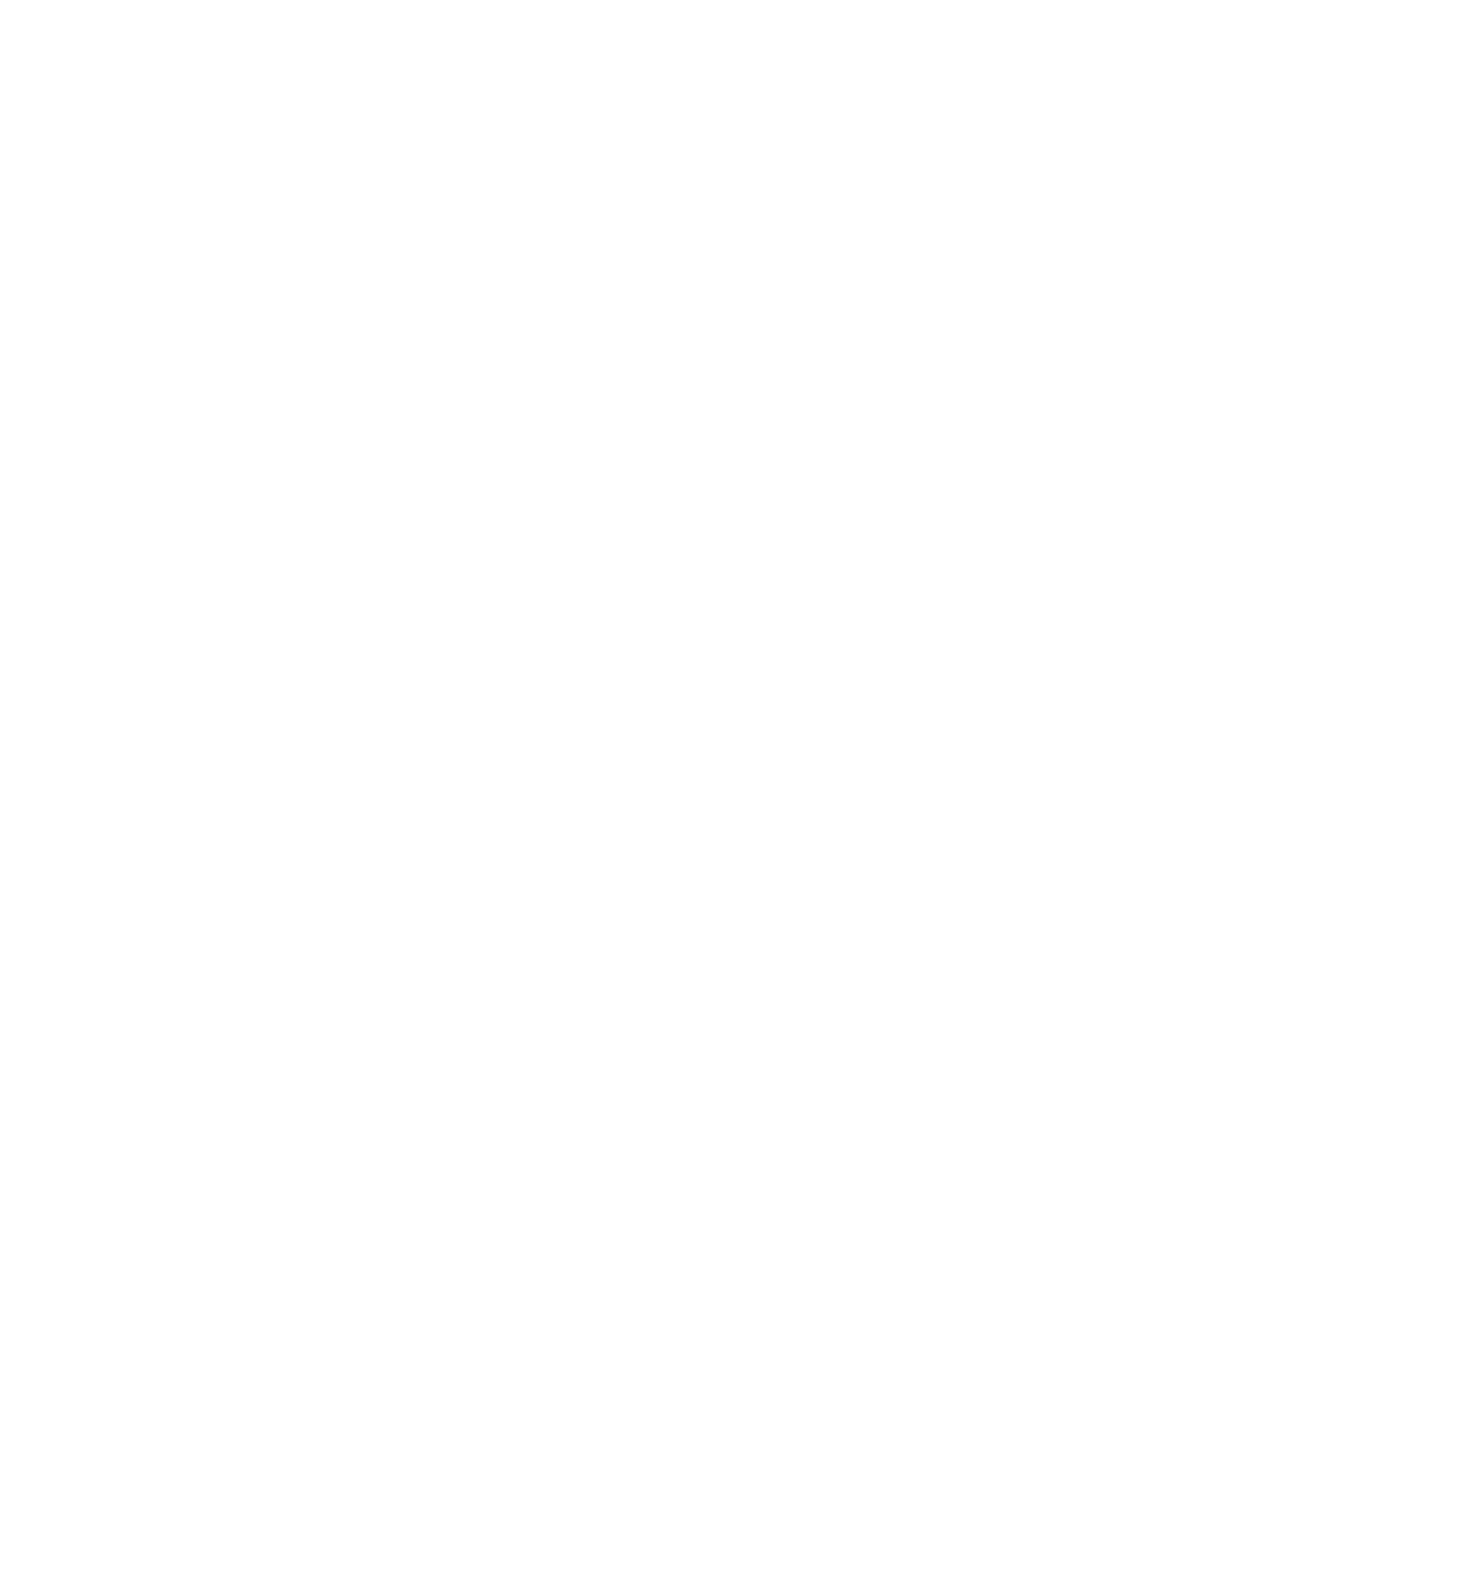 Xencor logo for dark backgrounds (transparent PNG)